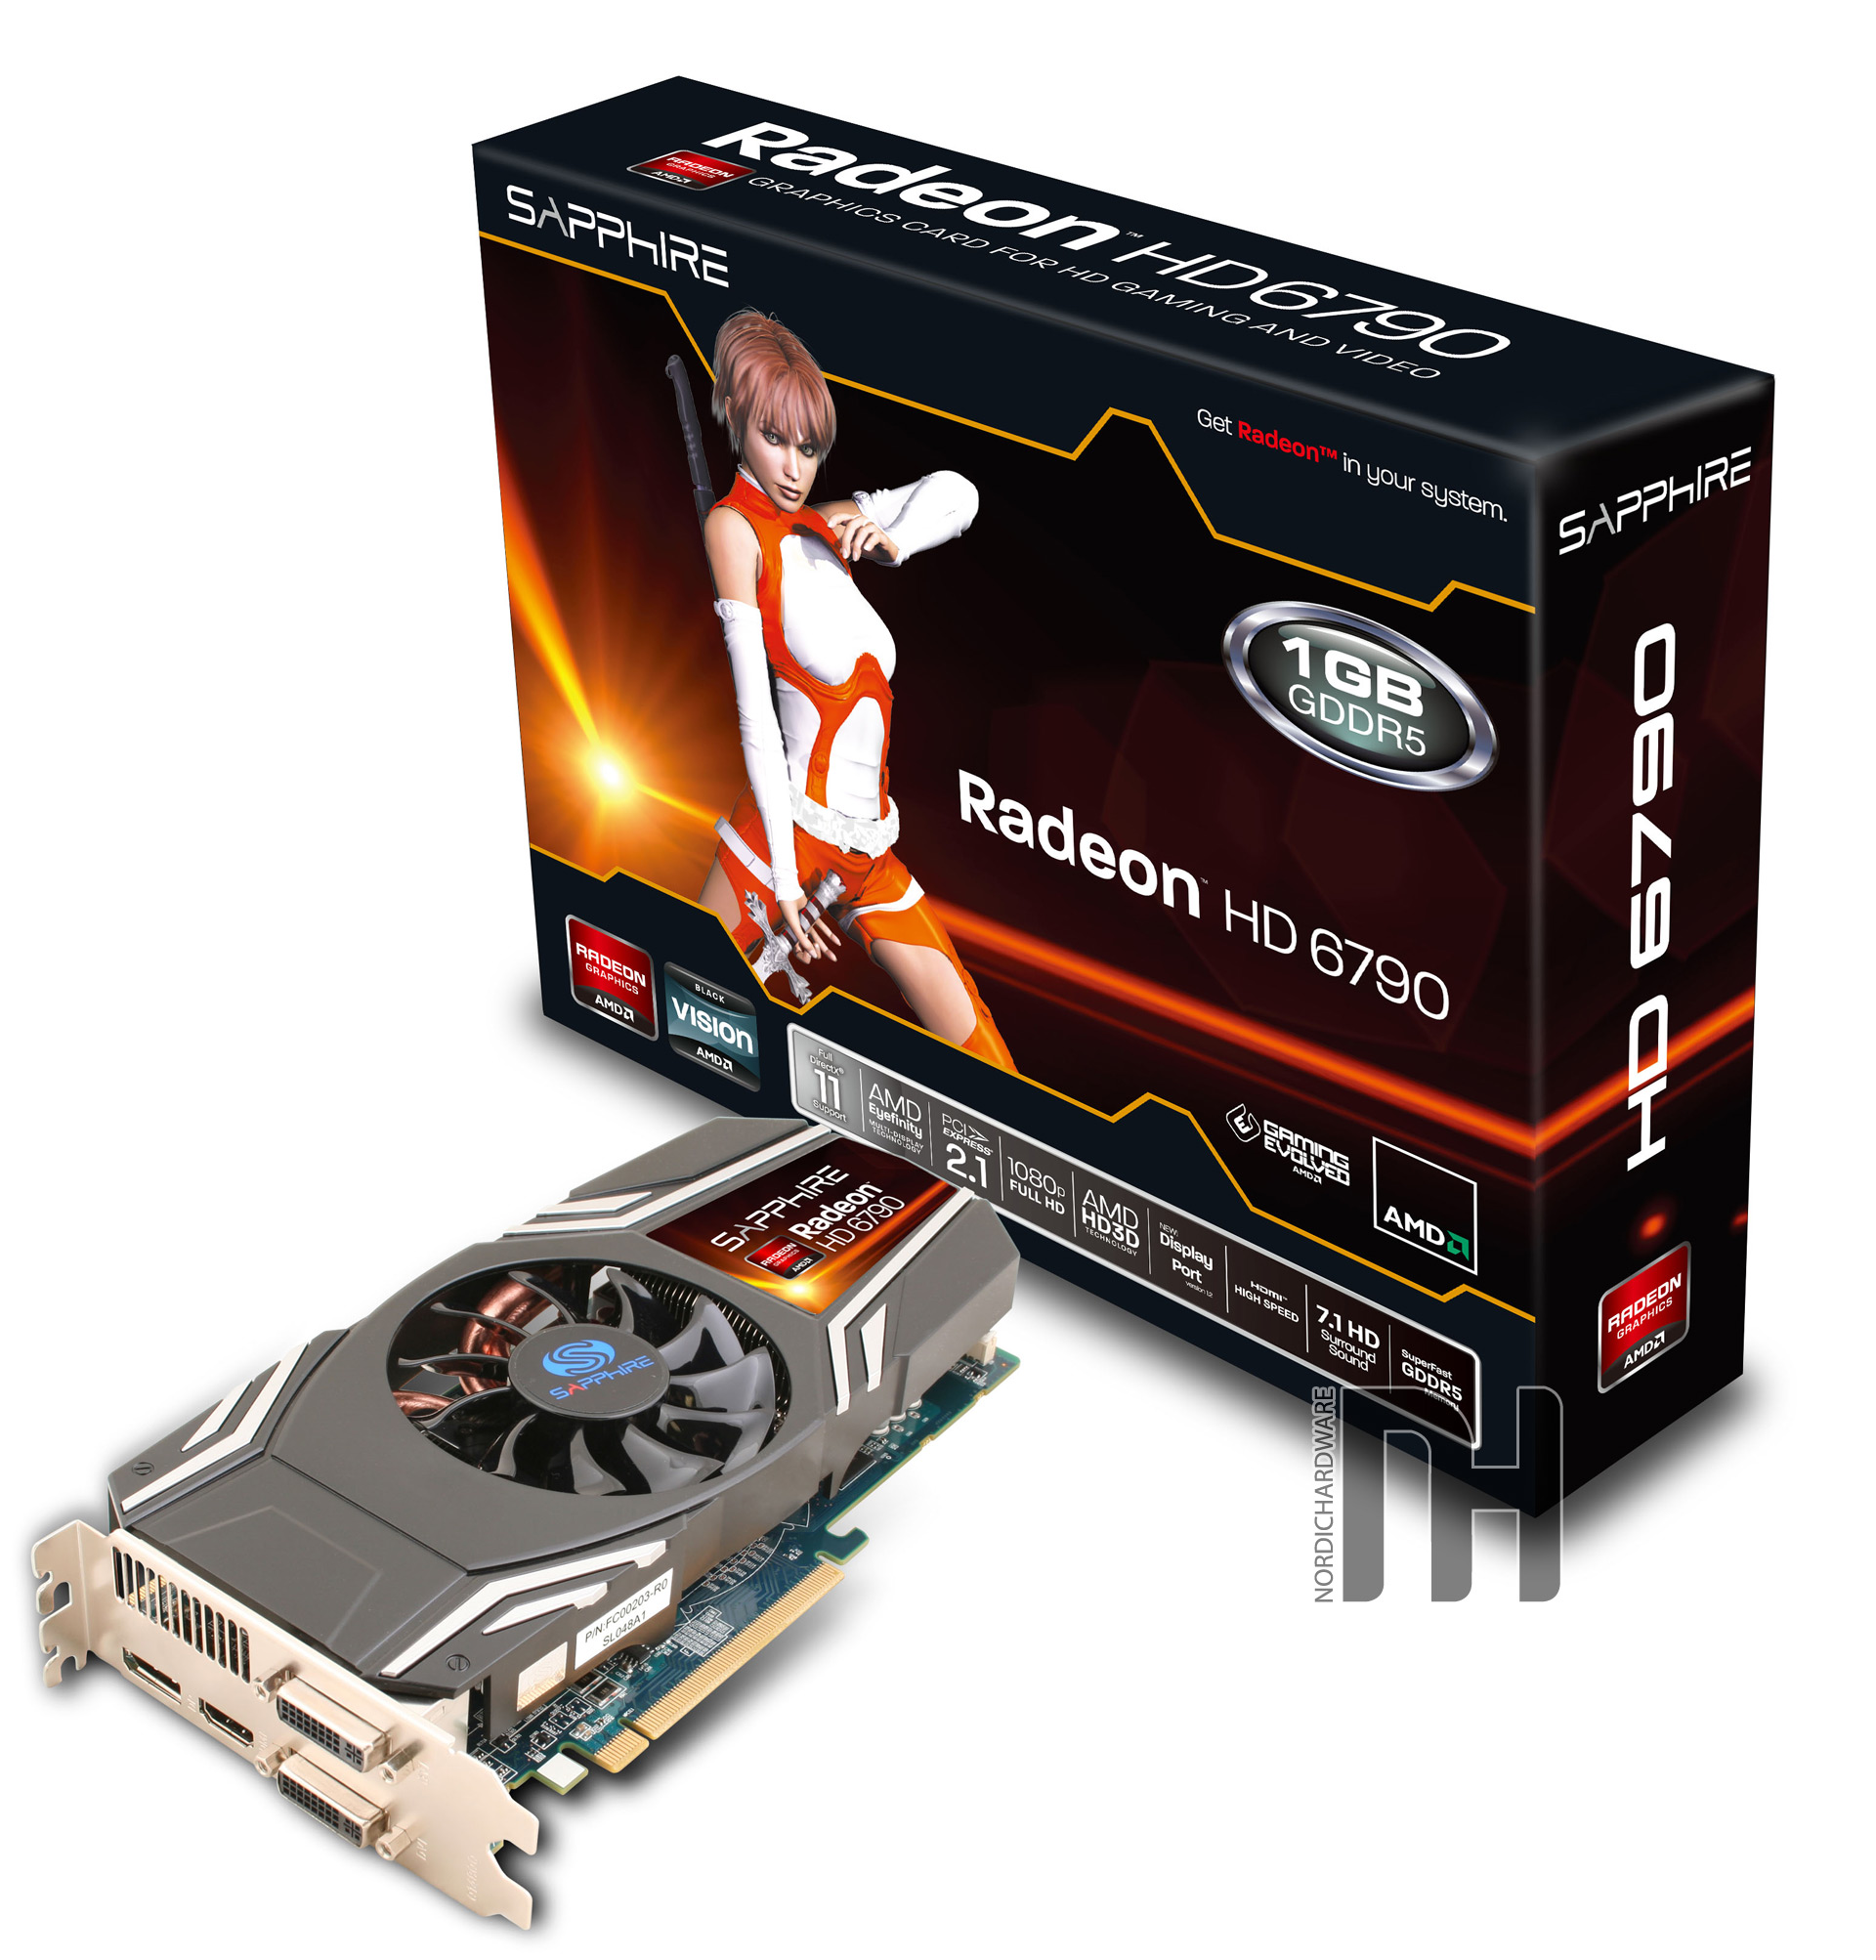 Видео радеон. AMD Radeon hd6790 1 GB видеокарта. Видеокарта Sapphire Radeon 6790.